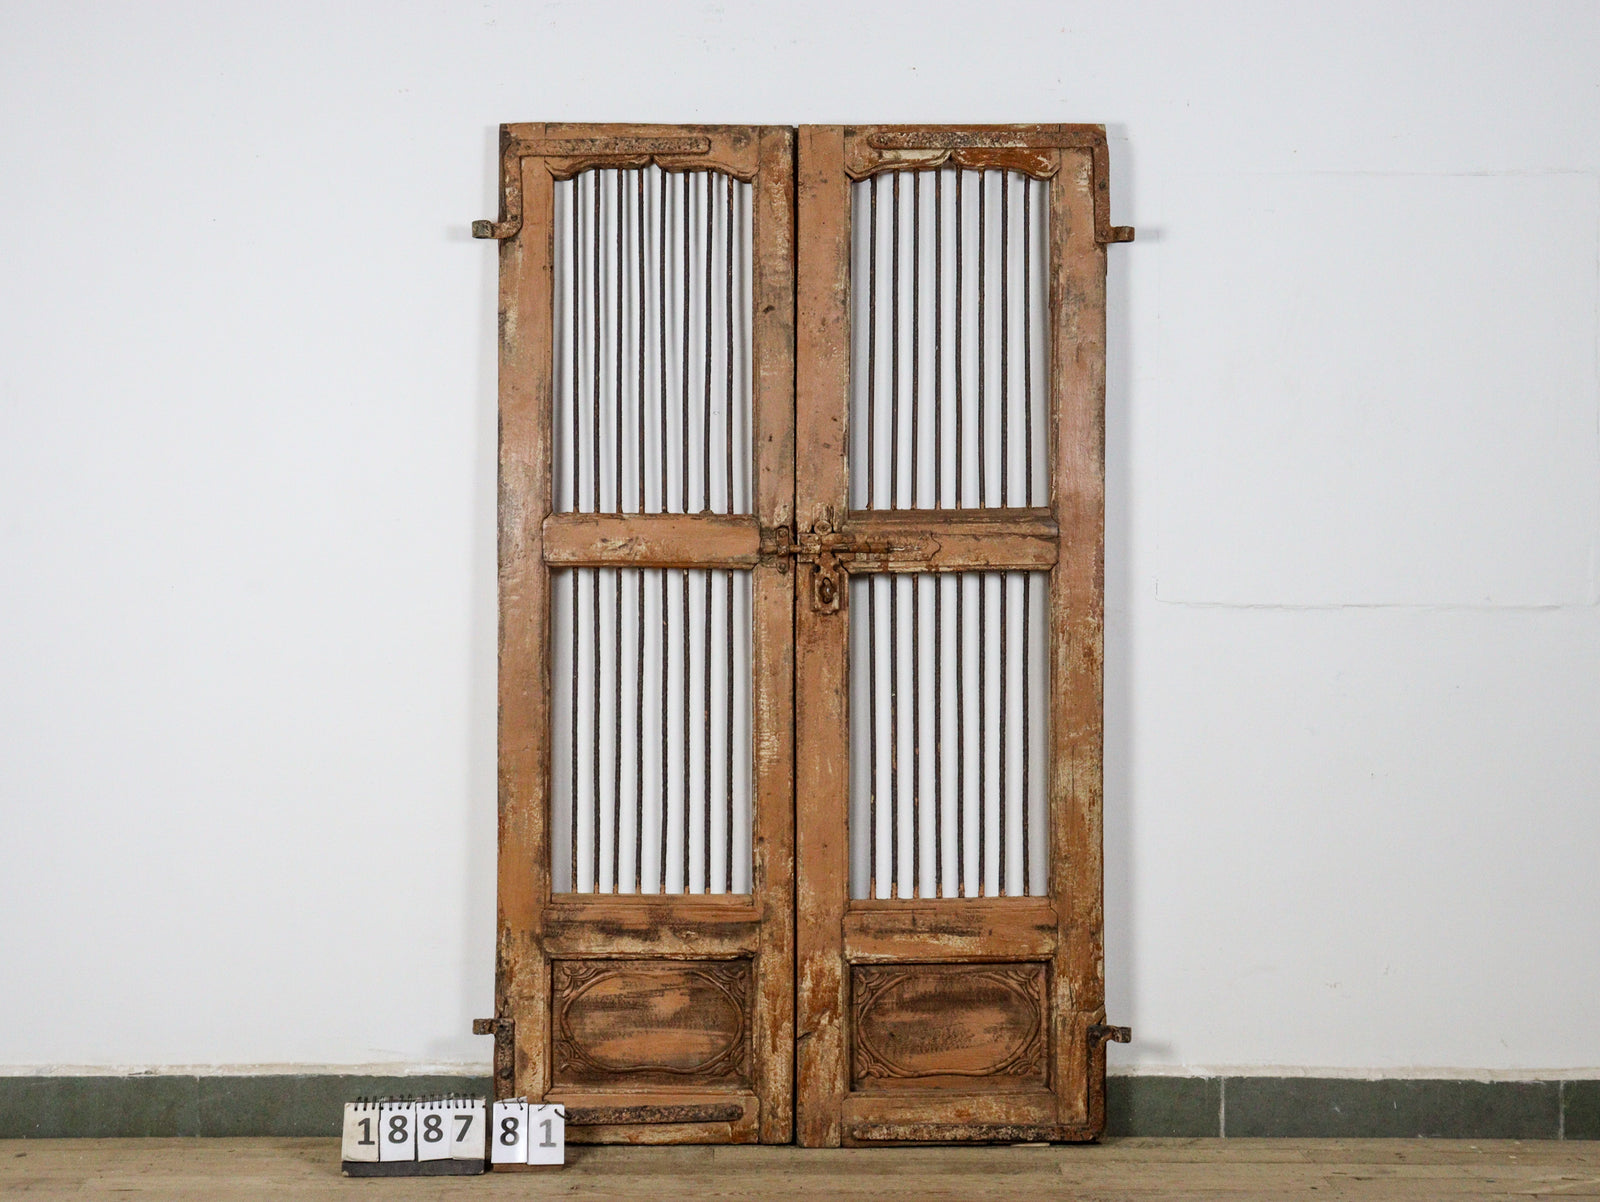 MILL-1887/81 Pair of Doors C26